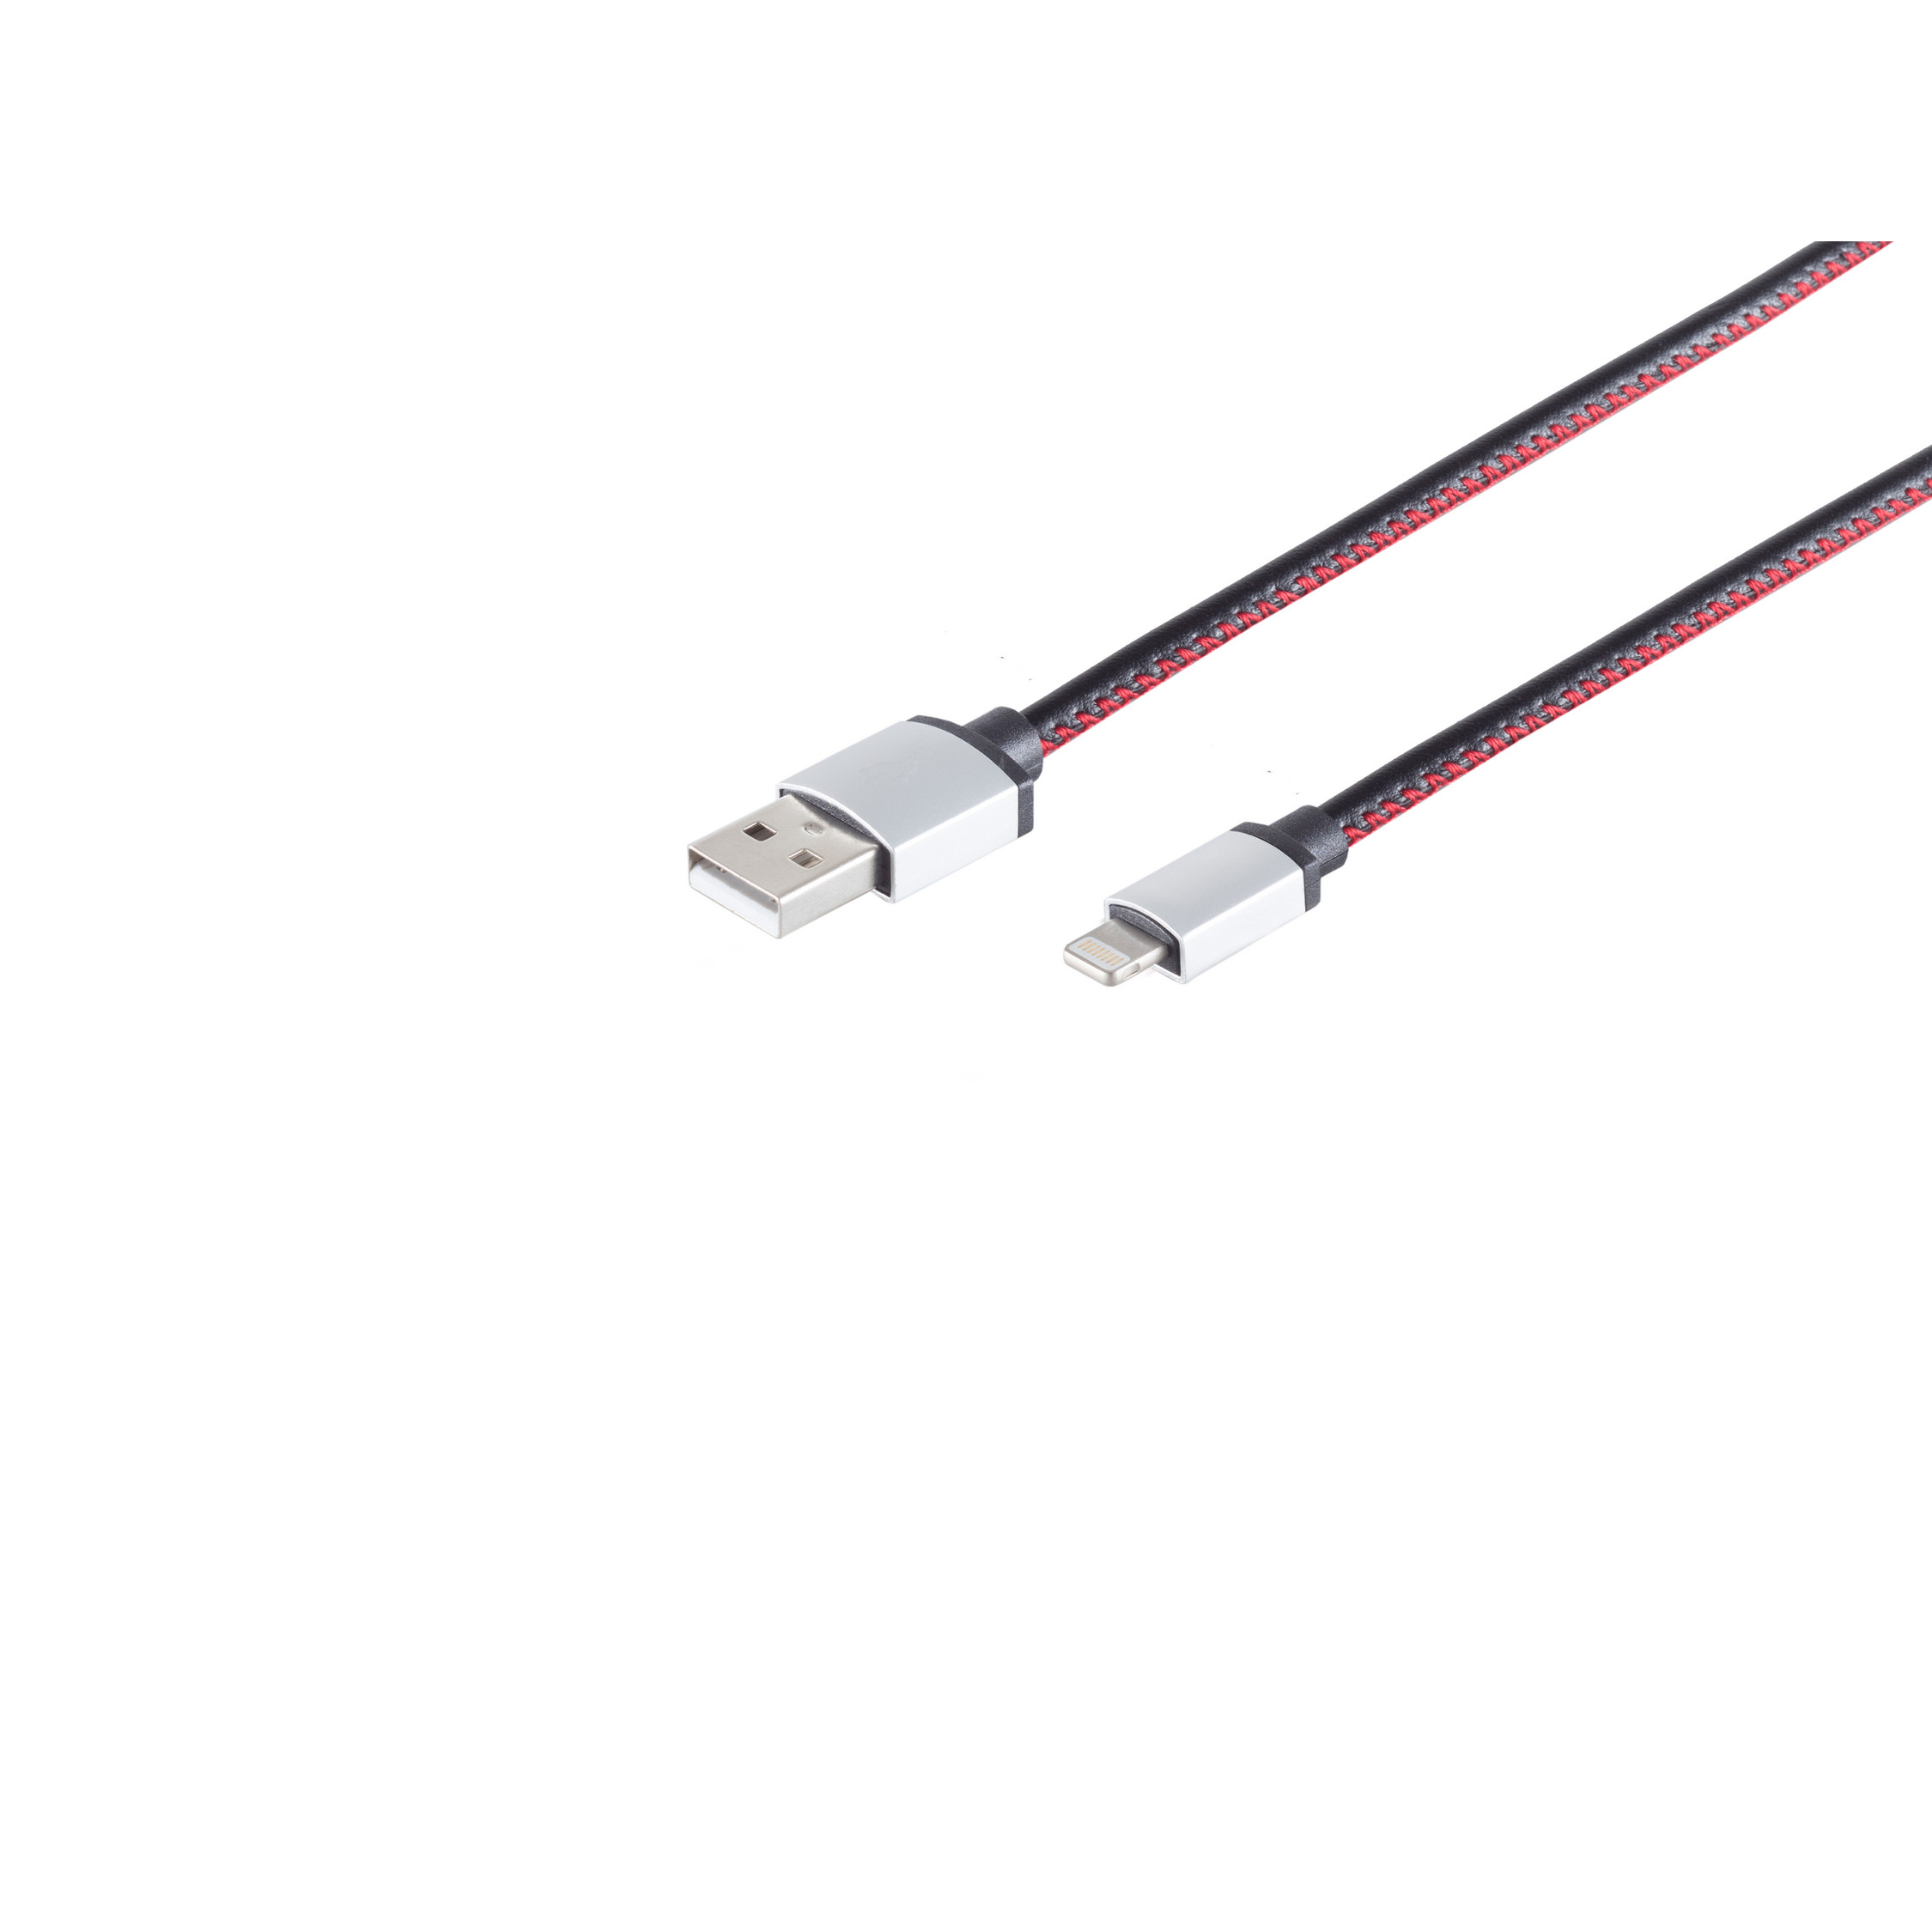 Kabel USB Stecker S/CONN auf Stecker 8-pin USB-Ladekabel A MAXIMUM CONNECTIVITY 0,9m